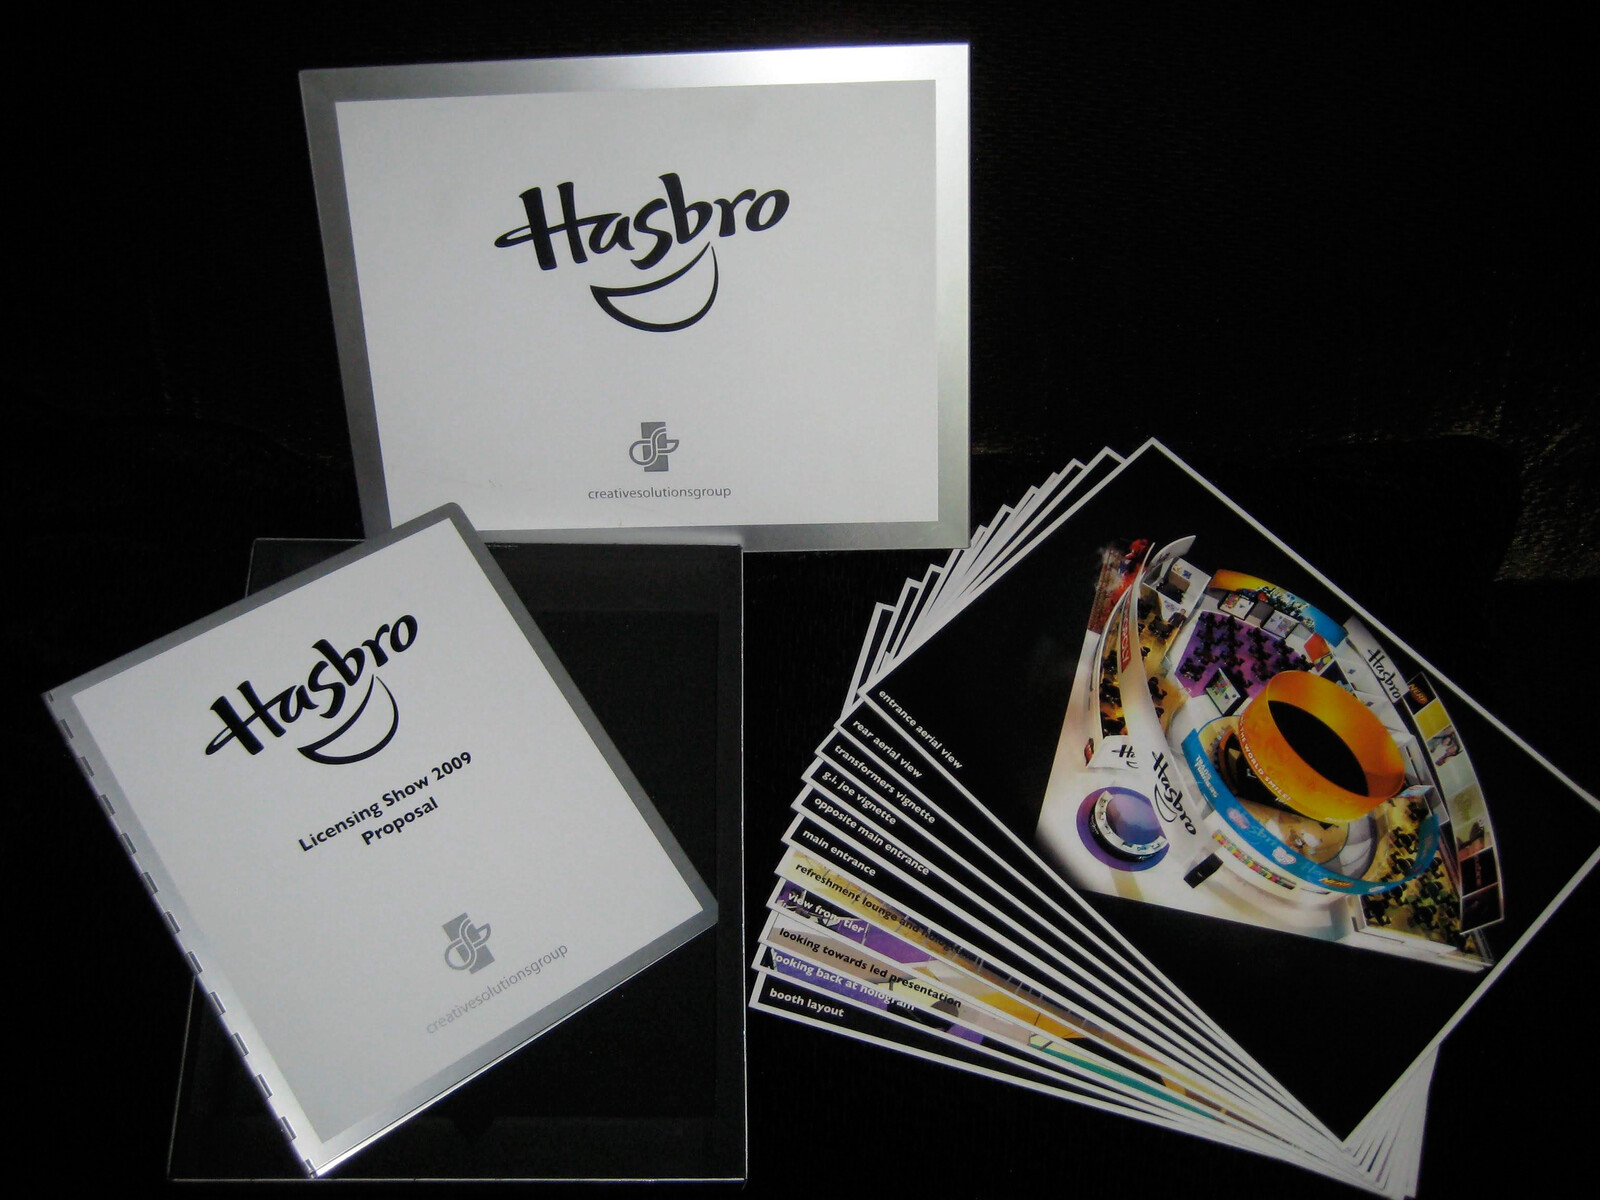 Hasbro Licensing Show 2009 Proposal